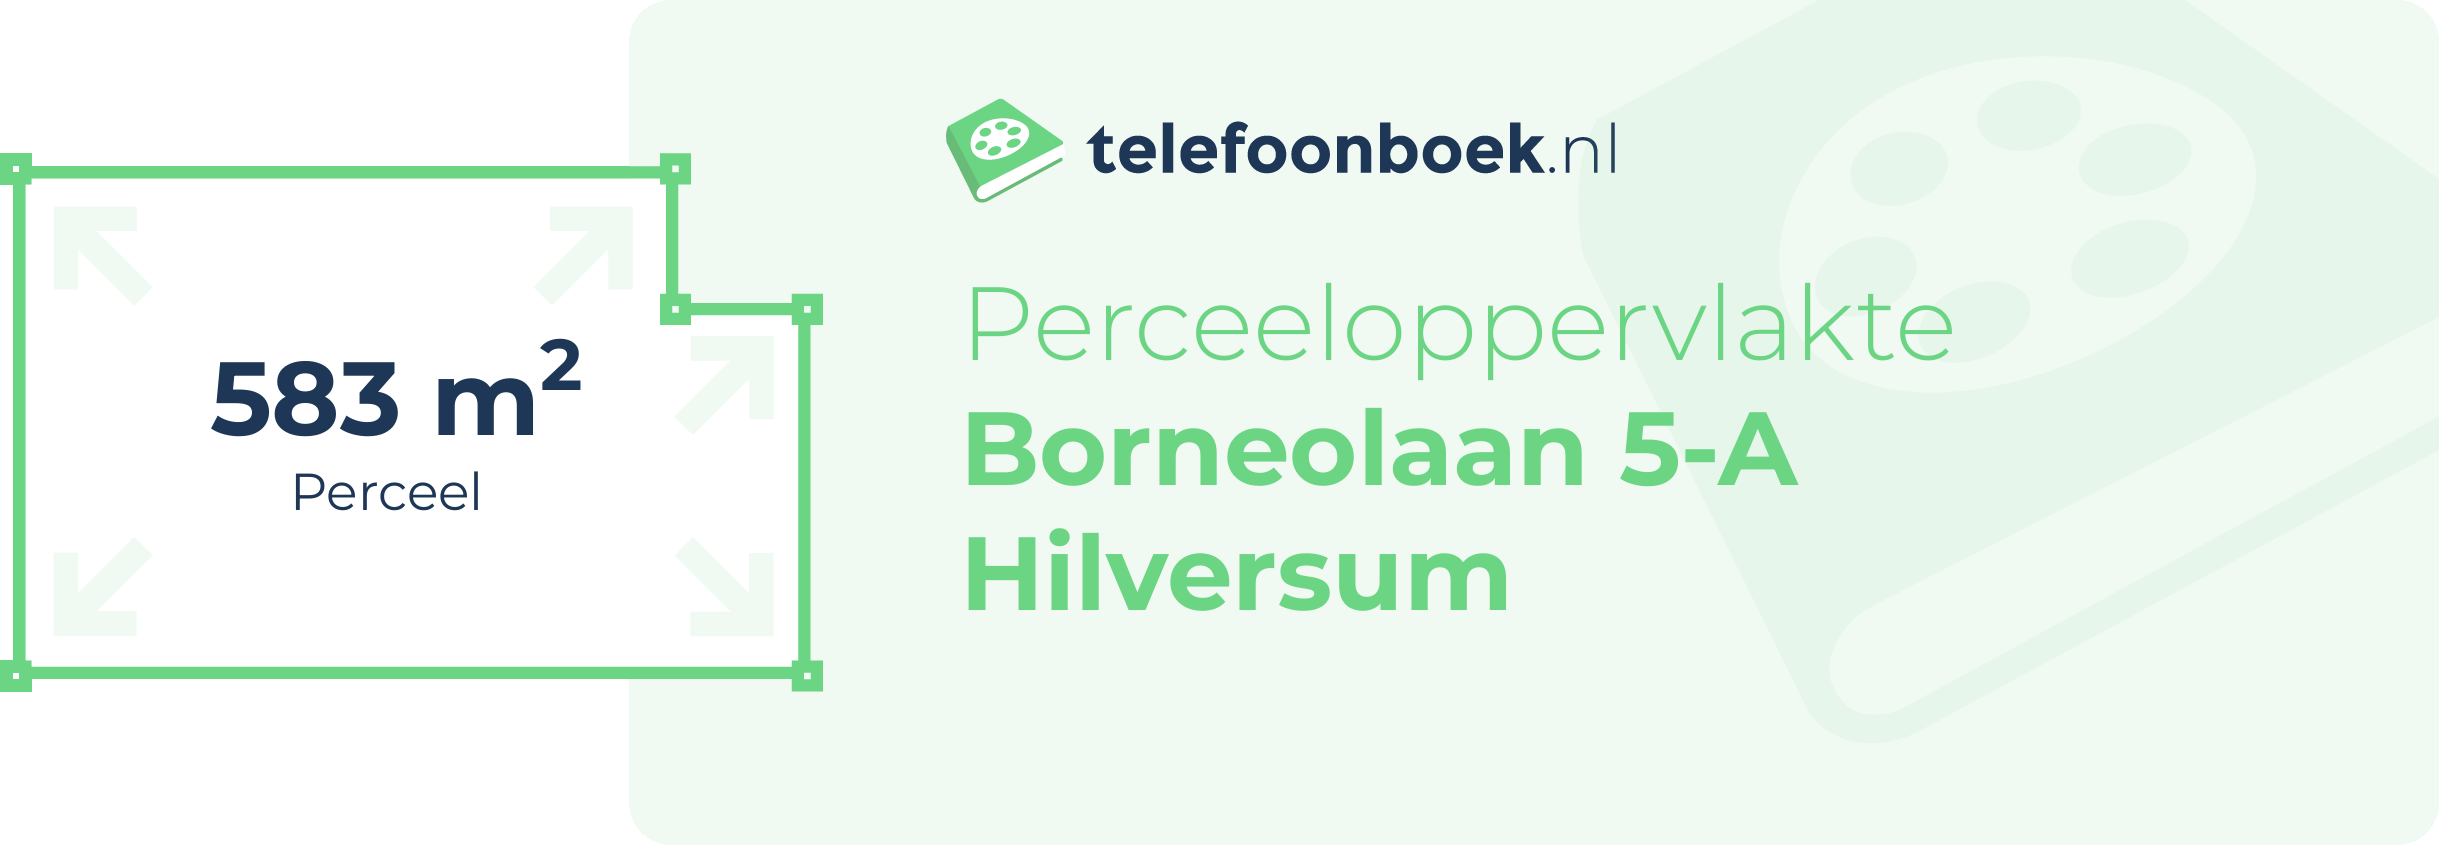 Perceeloppervlakte Borneolaan 5-A Hilversum